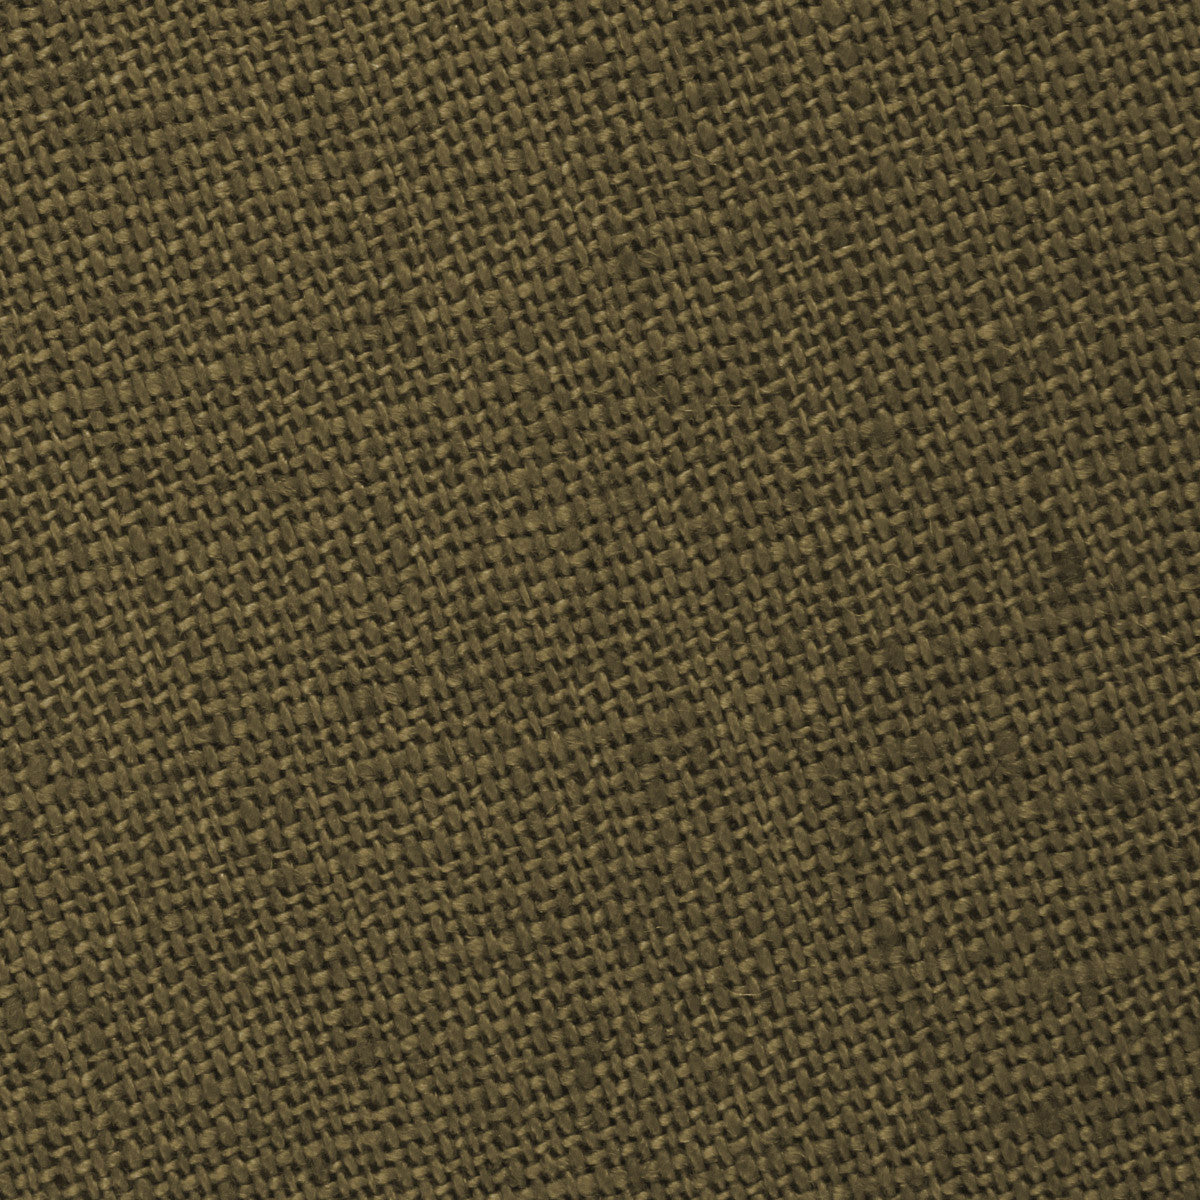 Dry Green Khaki Linen Fabric Self Diamond Bowtie